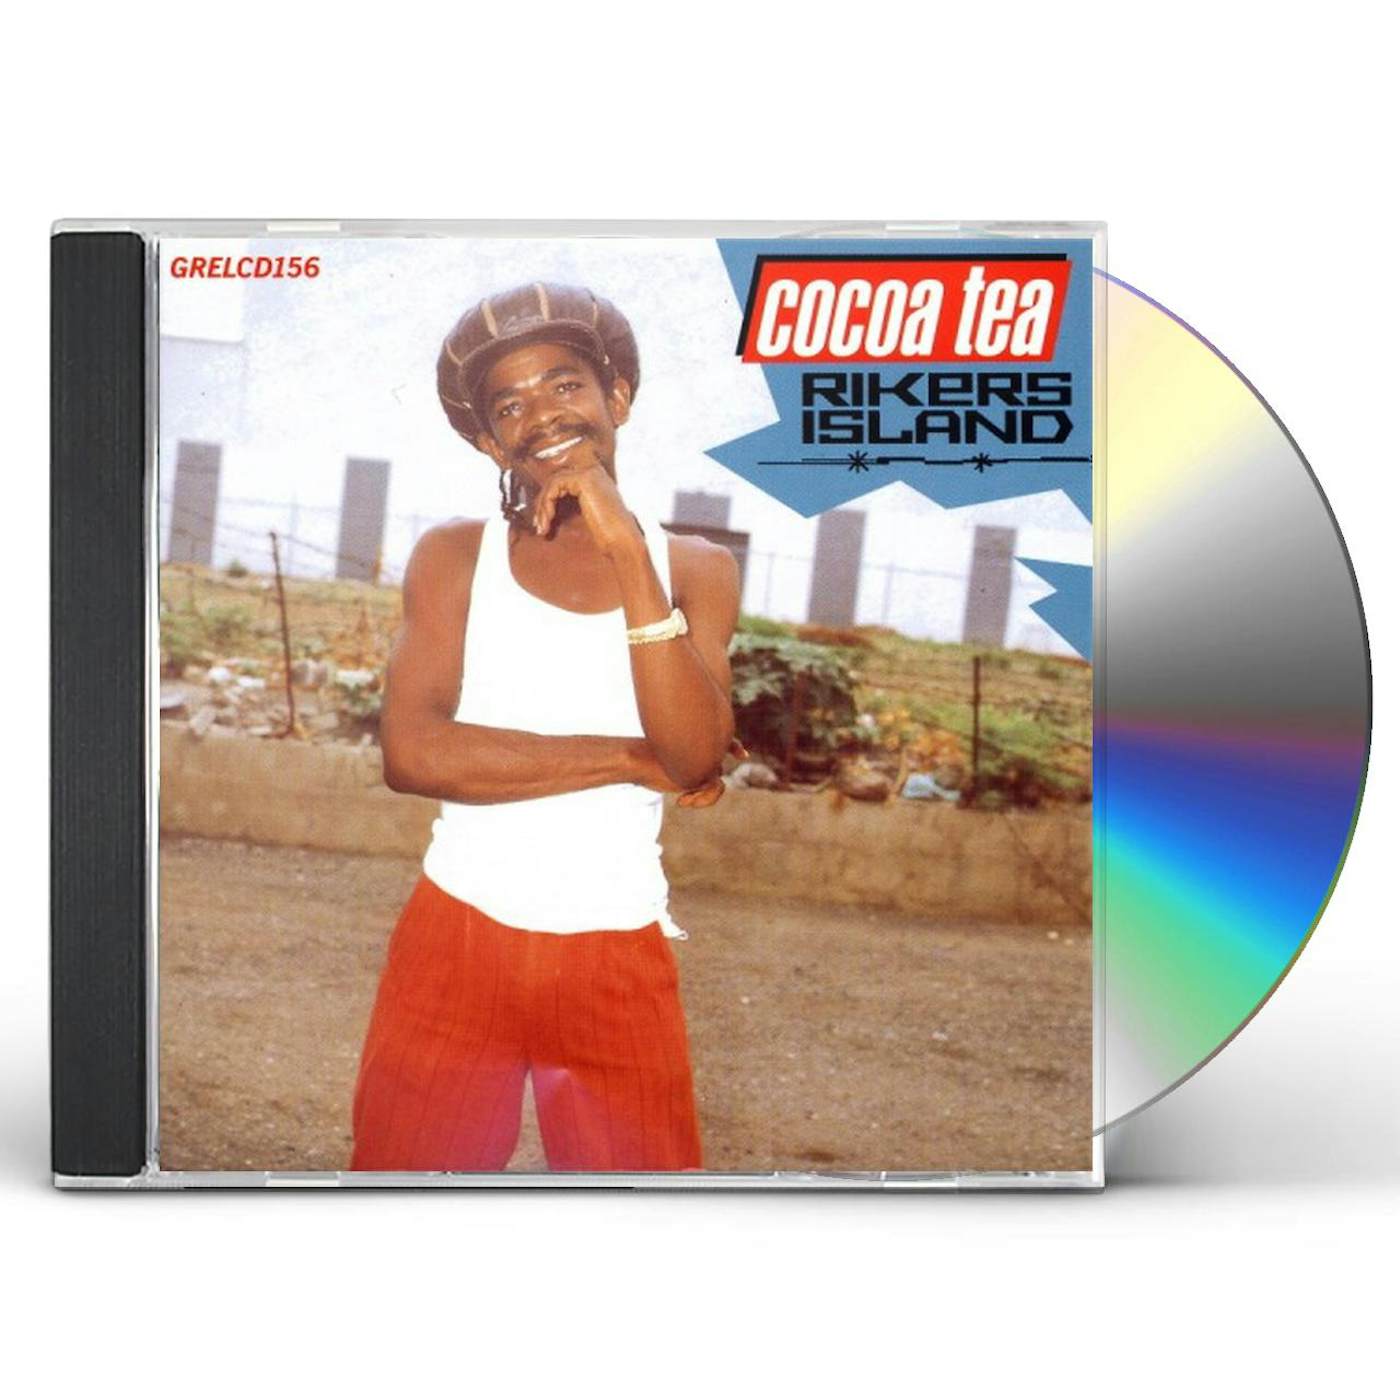 Cocoa Tea Rikers Island CD